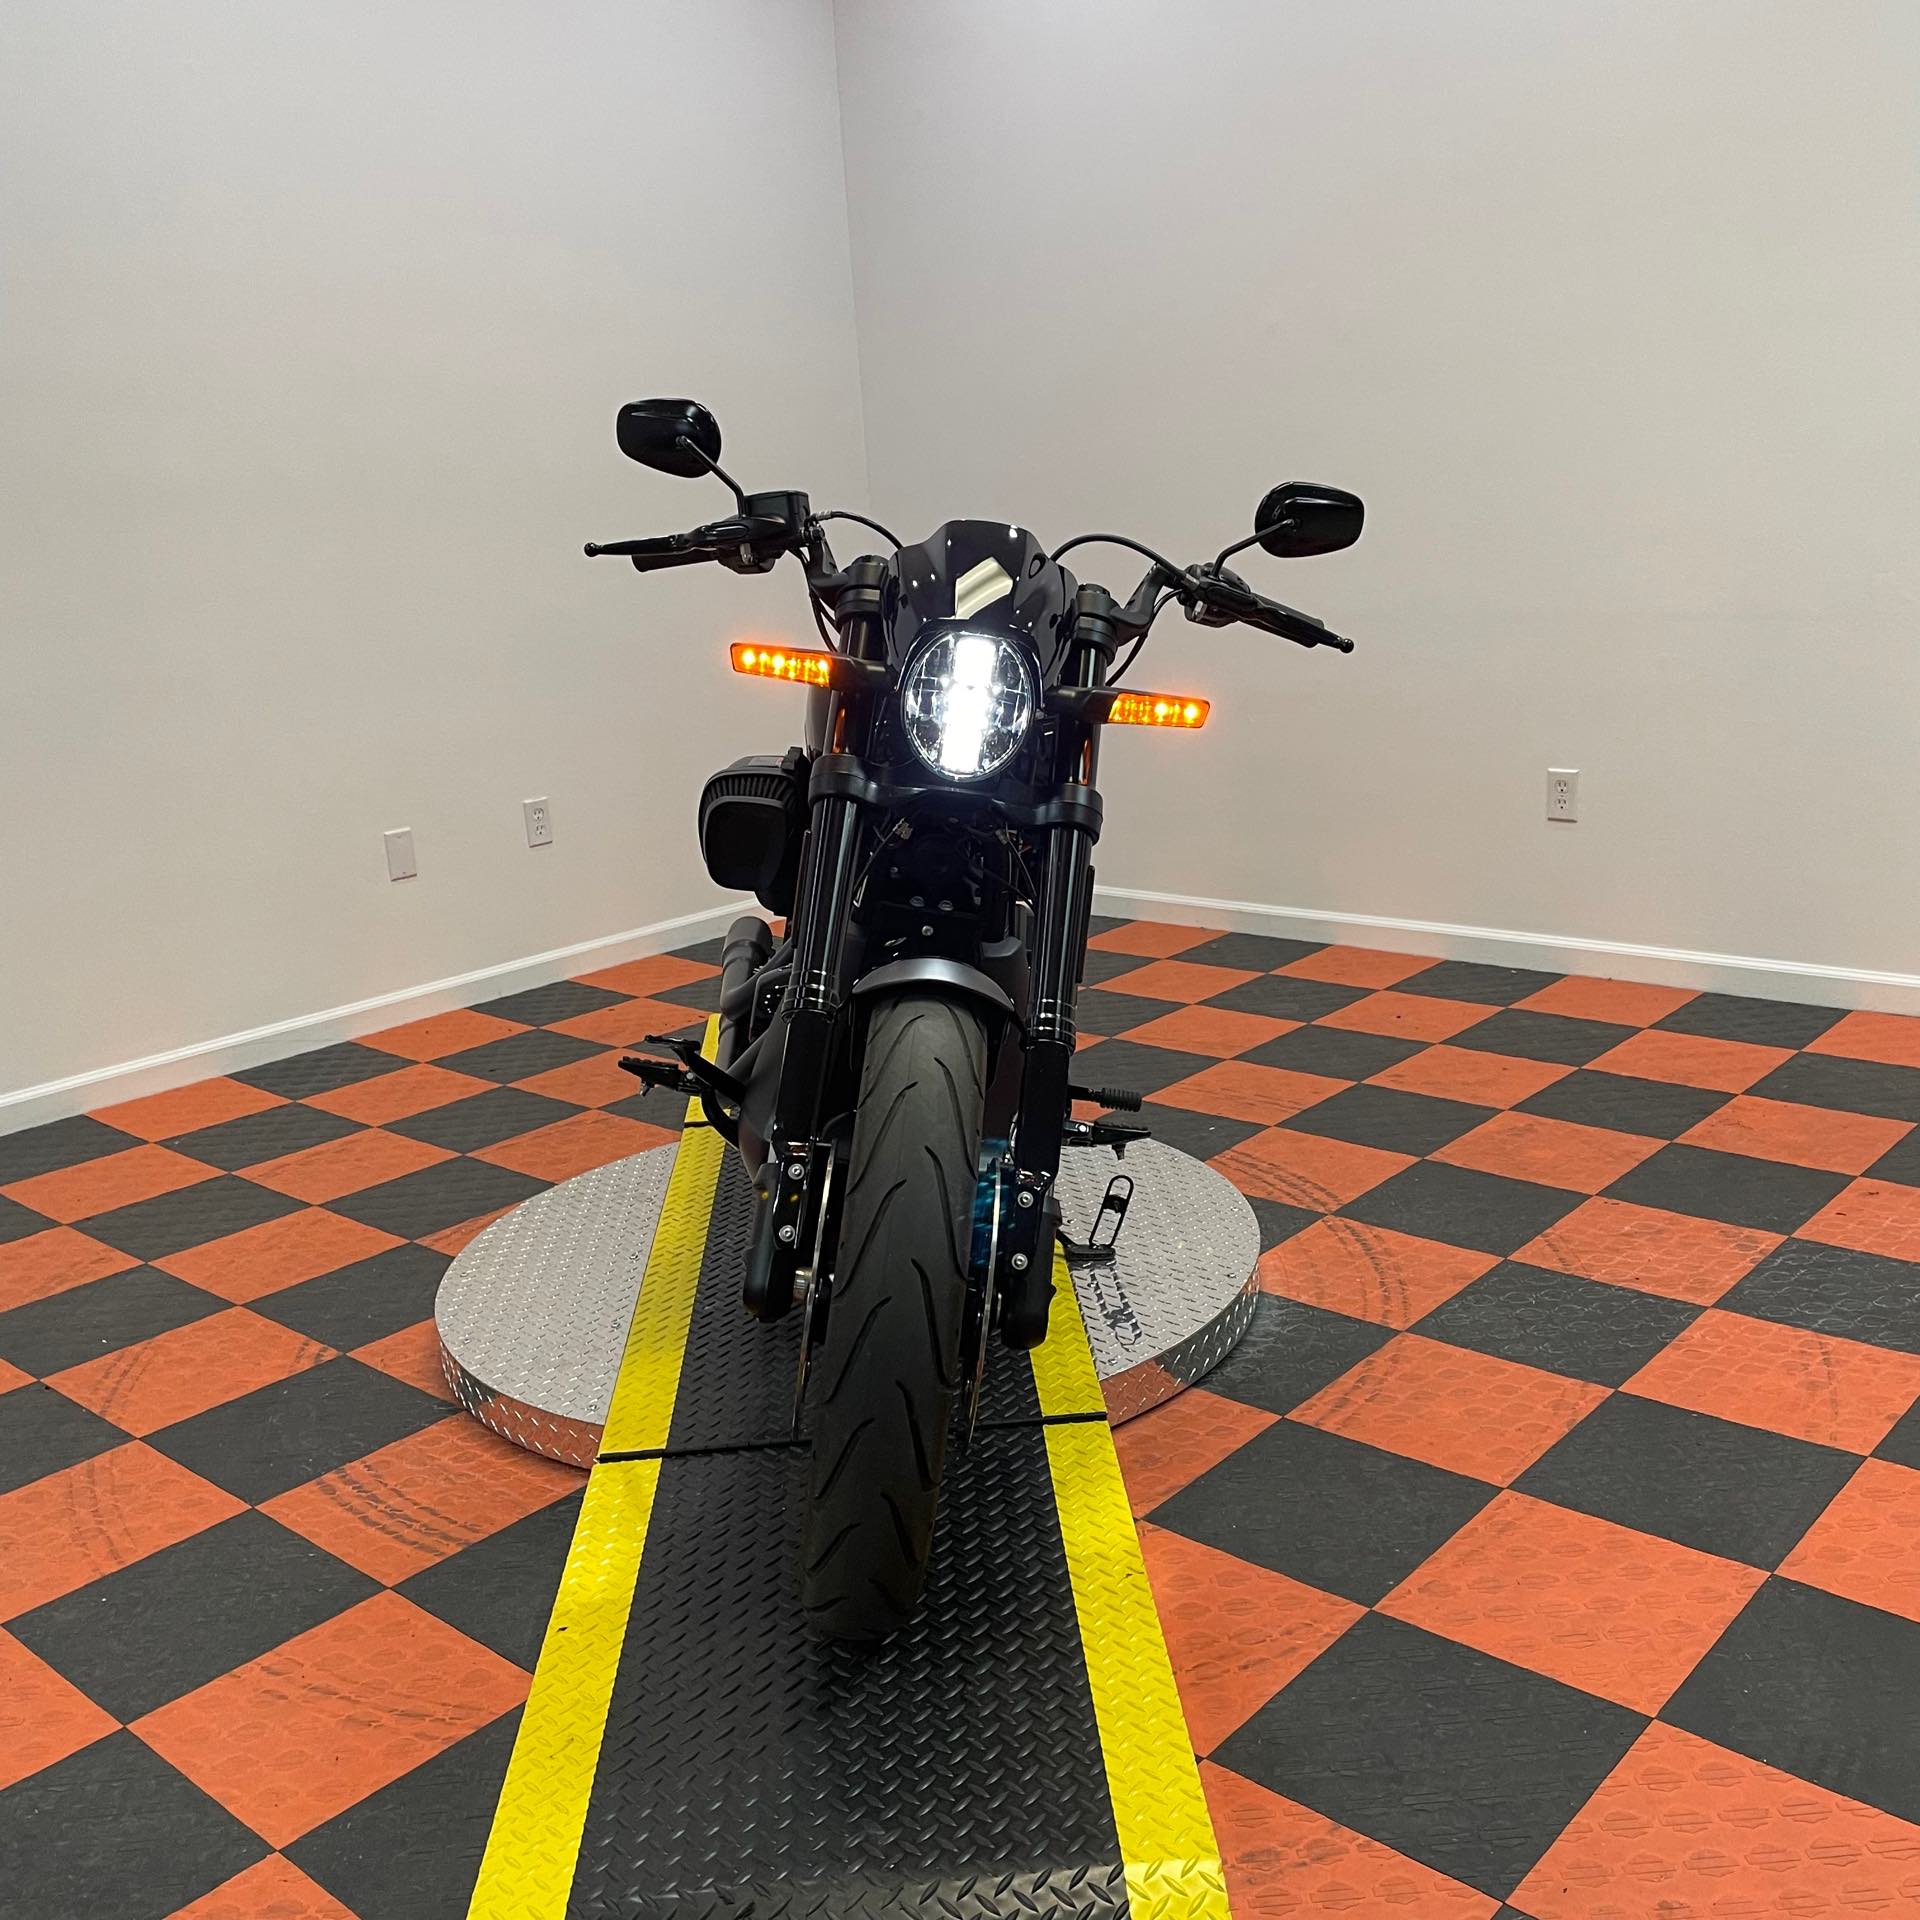 2019 Harley-Davidson Softail FXDR 114 at Harley-Davidson of Indianapolis